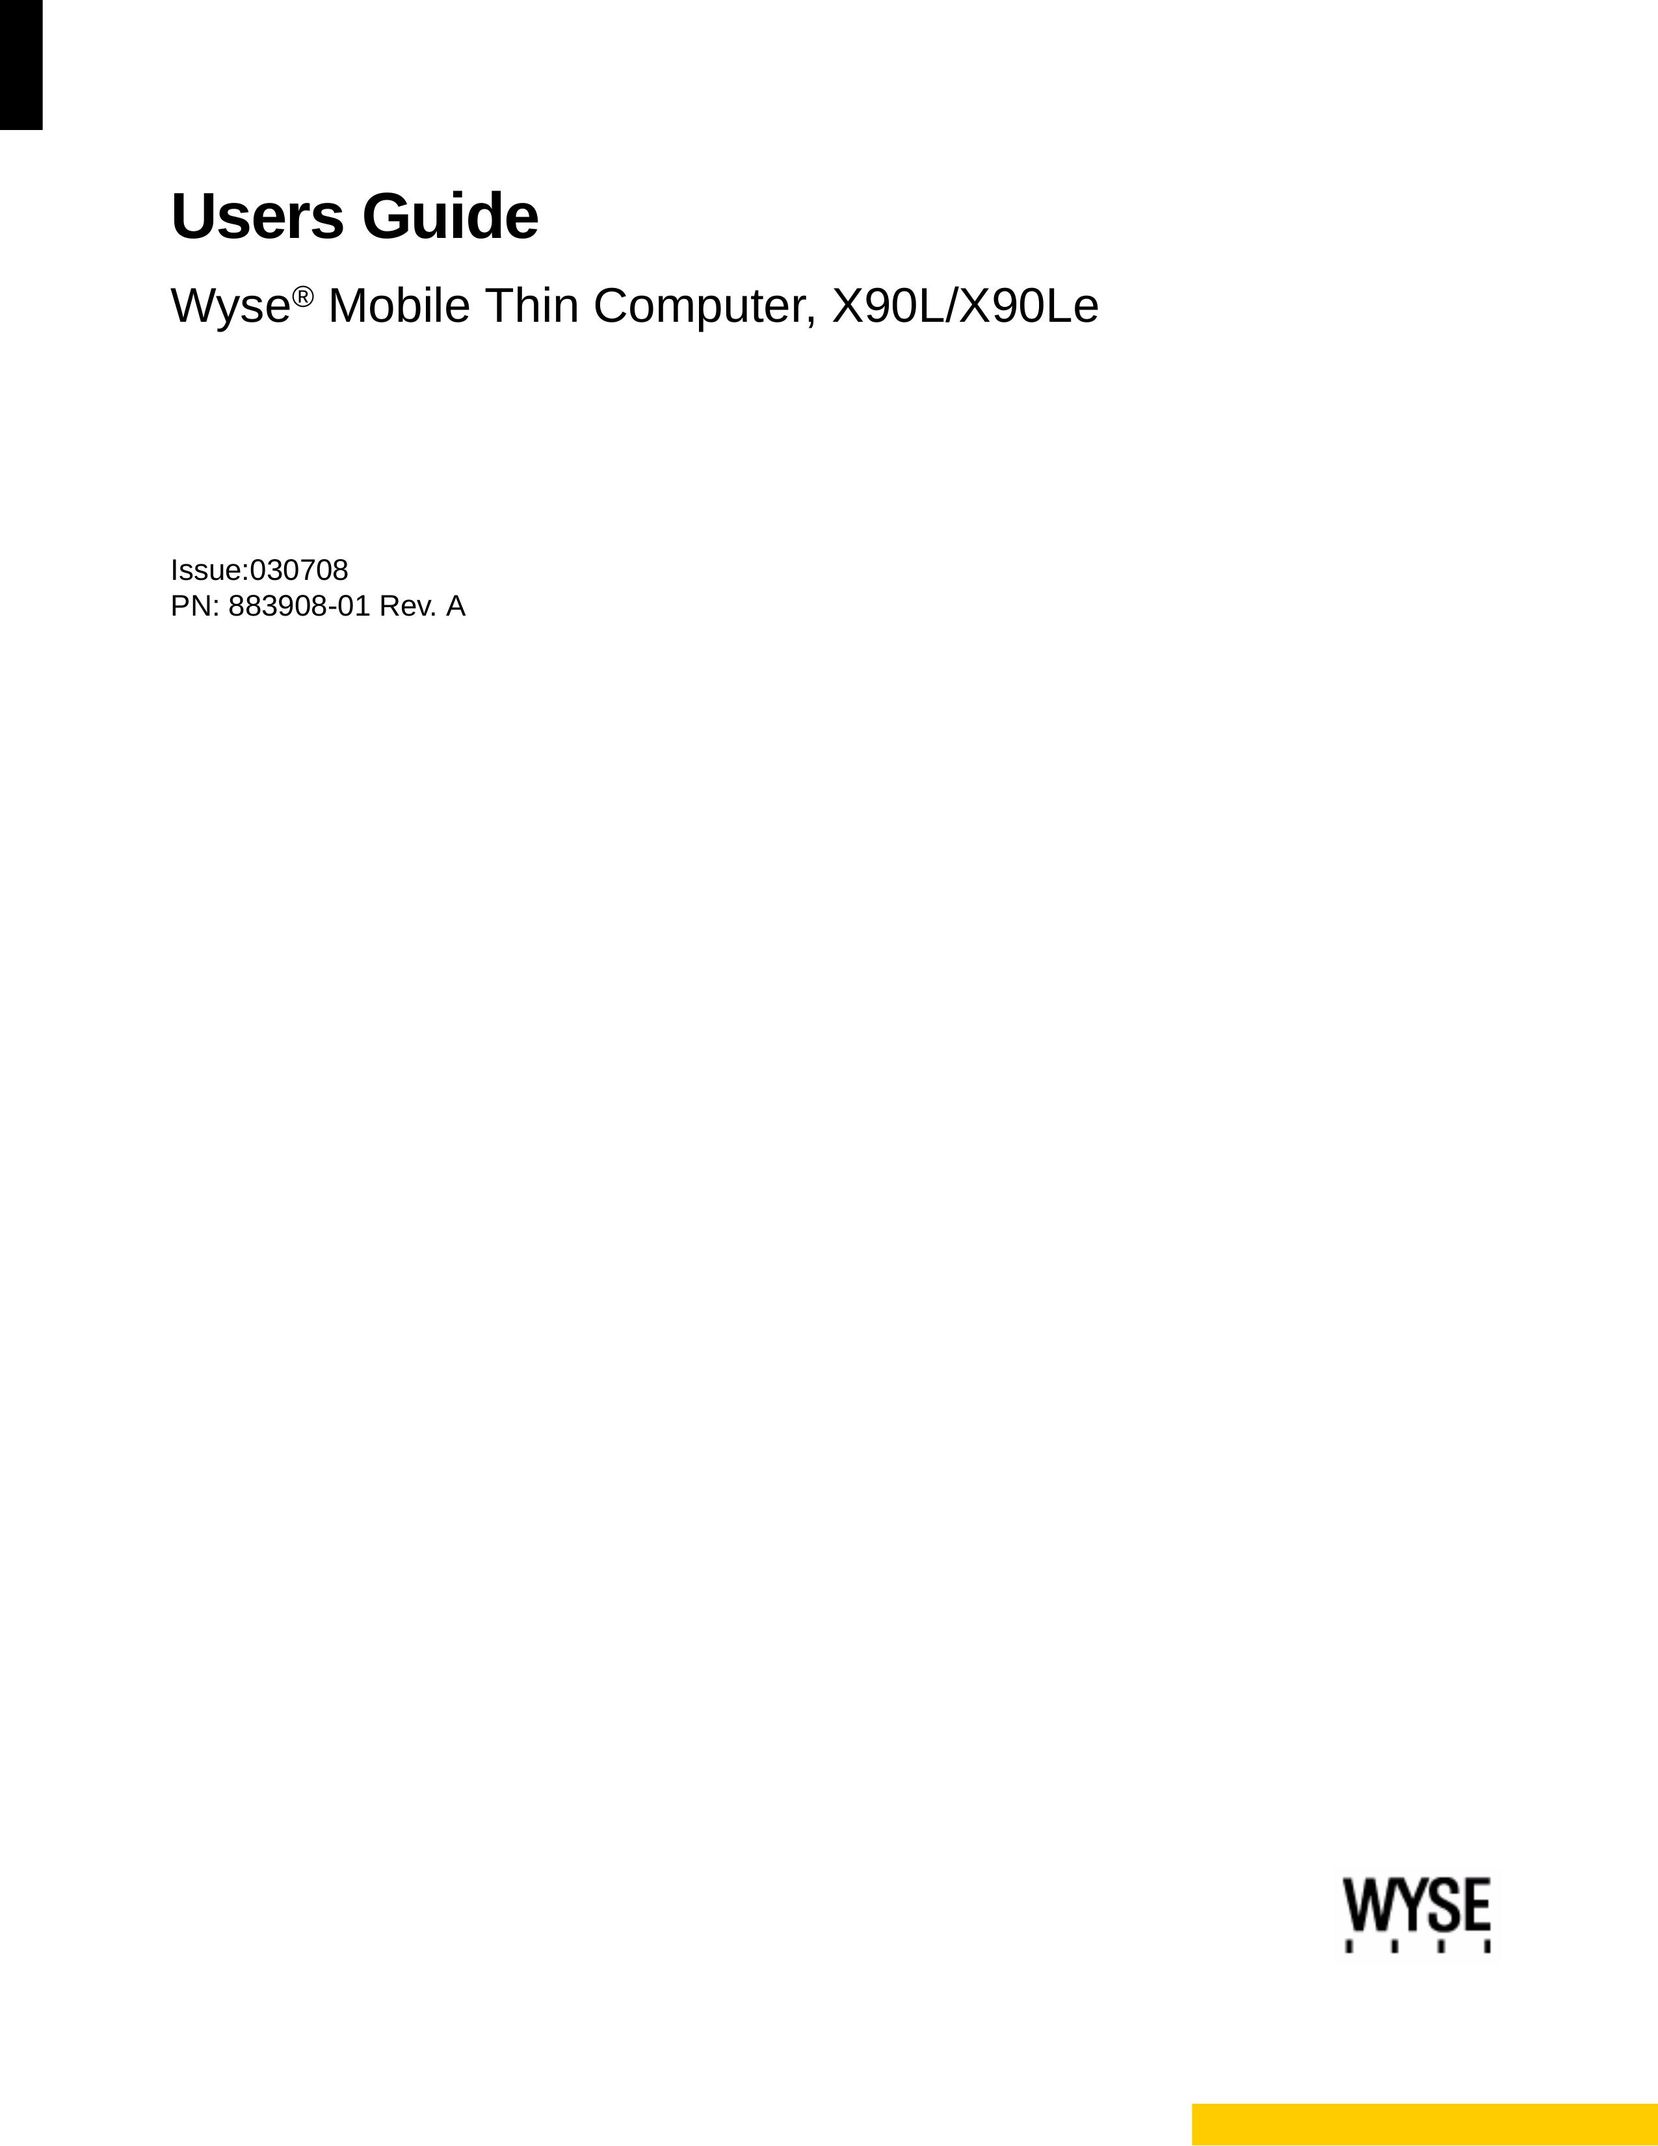 Wyse Technology 909522-41L Laptop User Manual